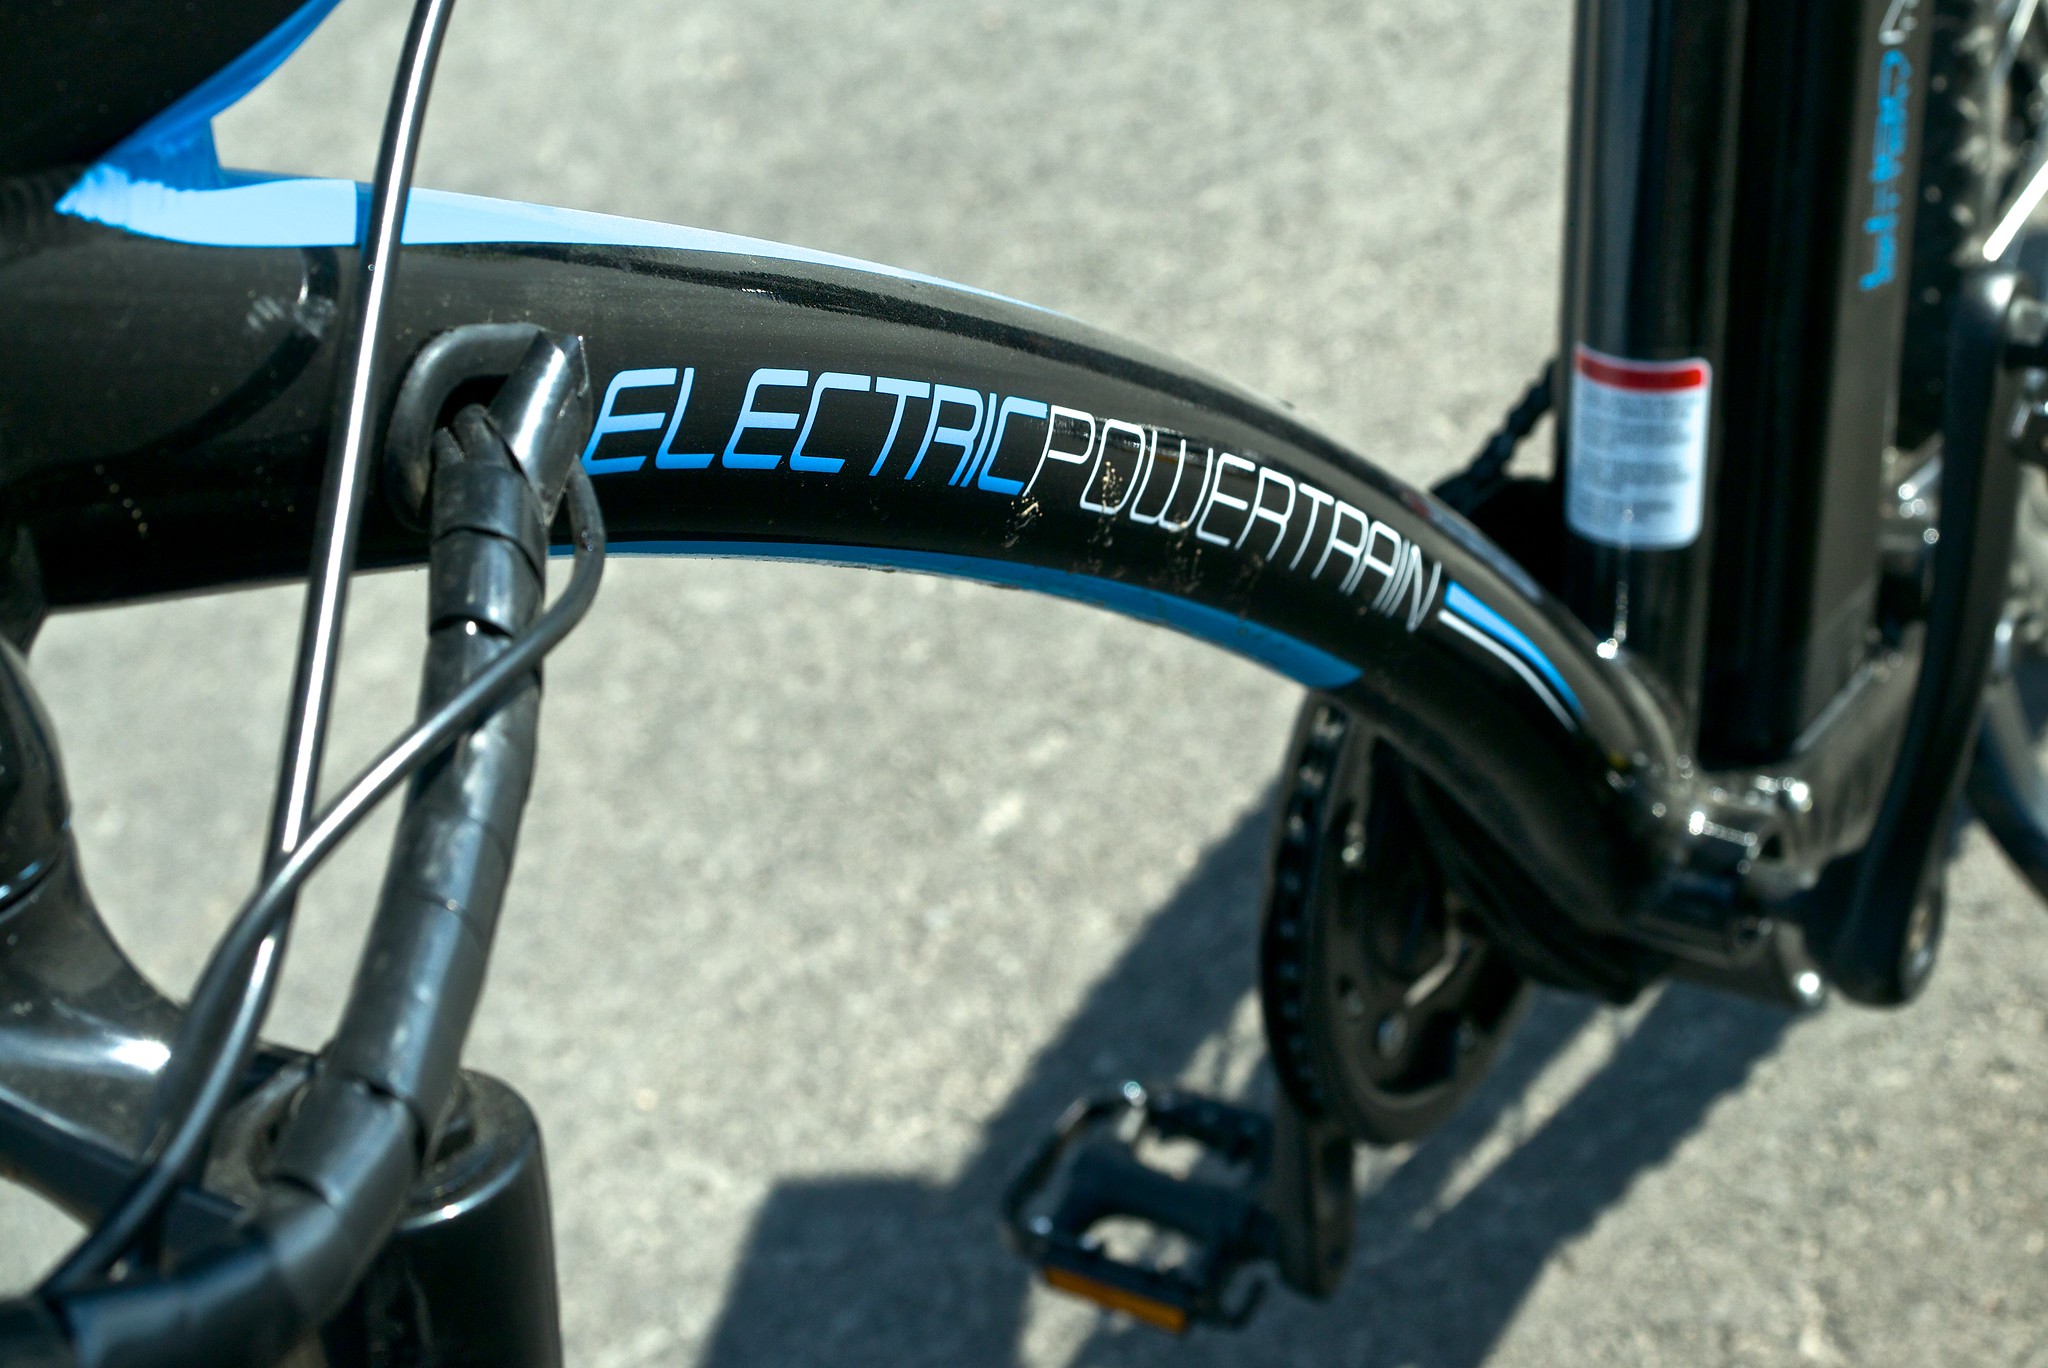 BlueShock electric bicycle. (Credit: Kārlis Dambrāns/ Flickr)